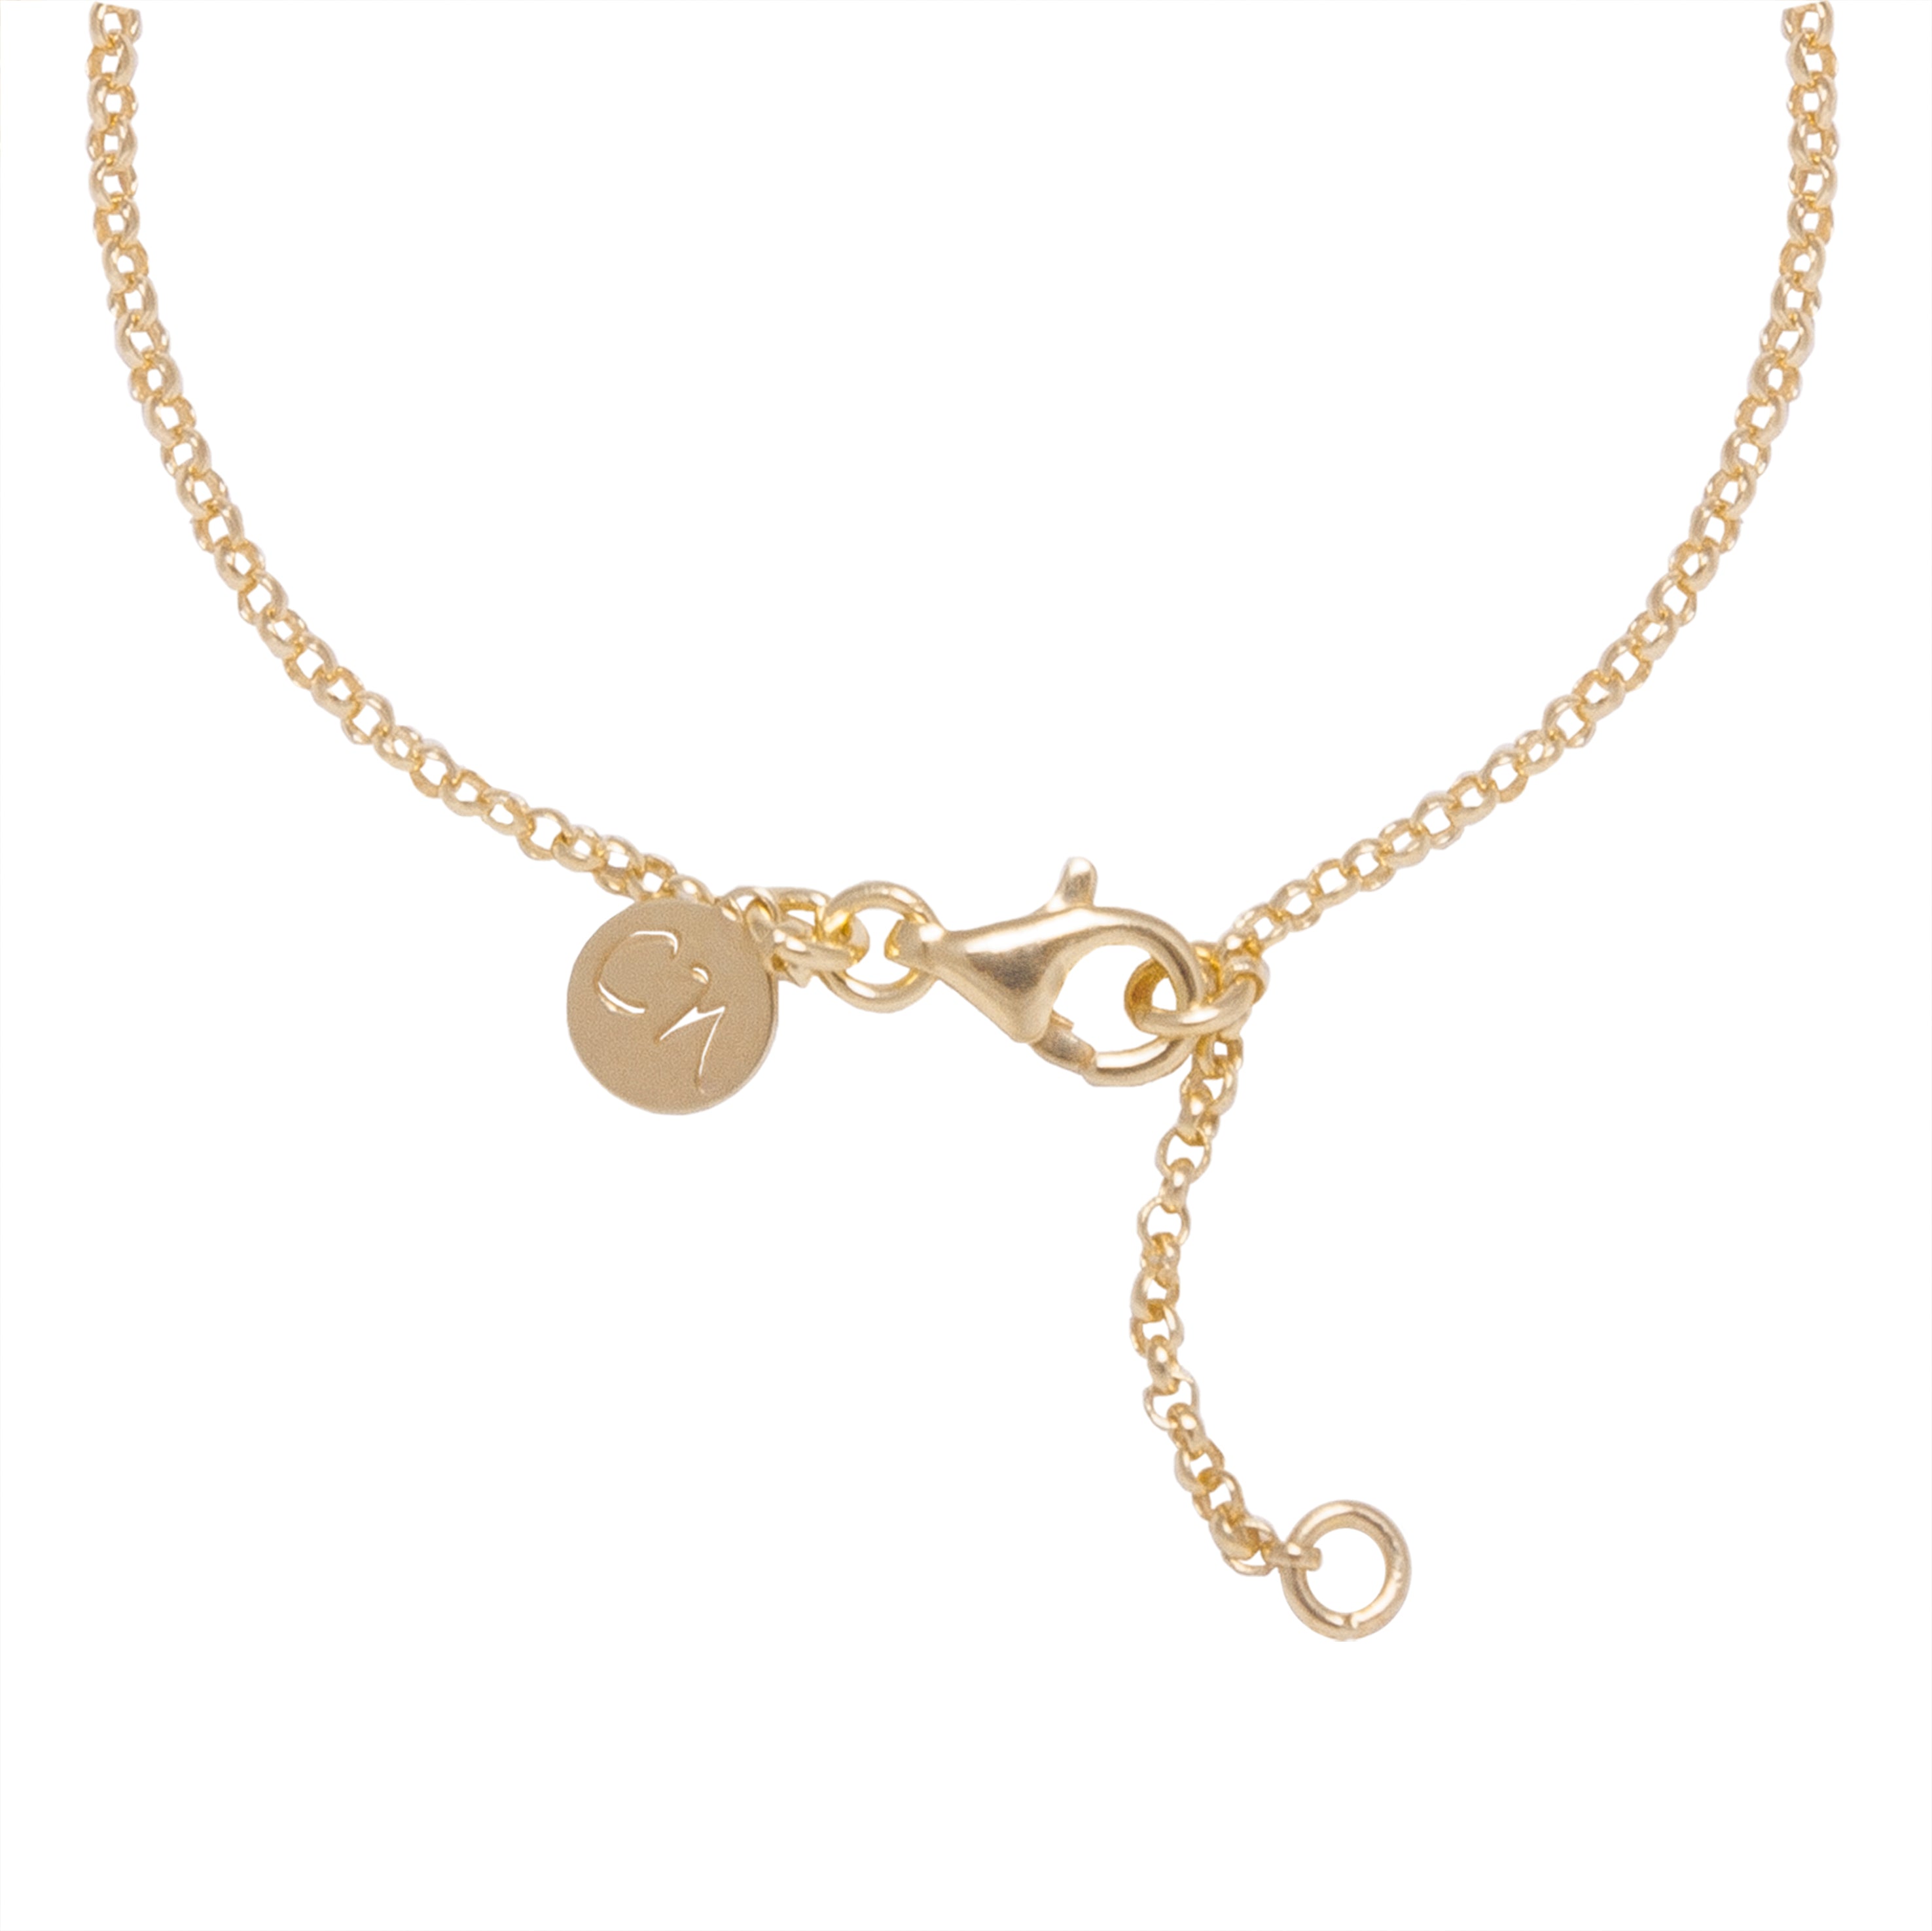 Claudia Navarro Jewelry - Bracelet Mandala2 / Gold